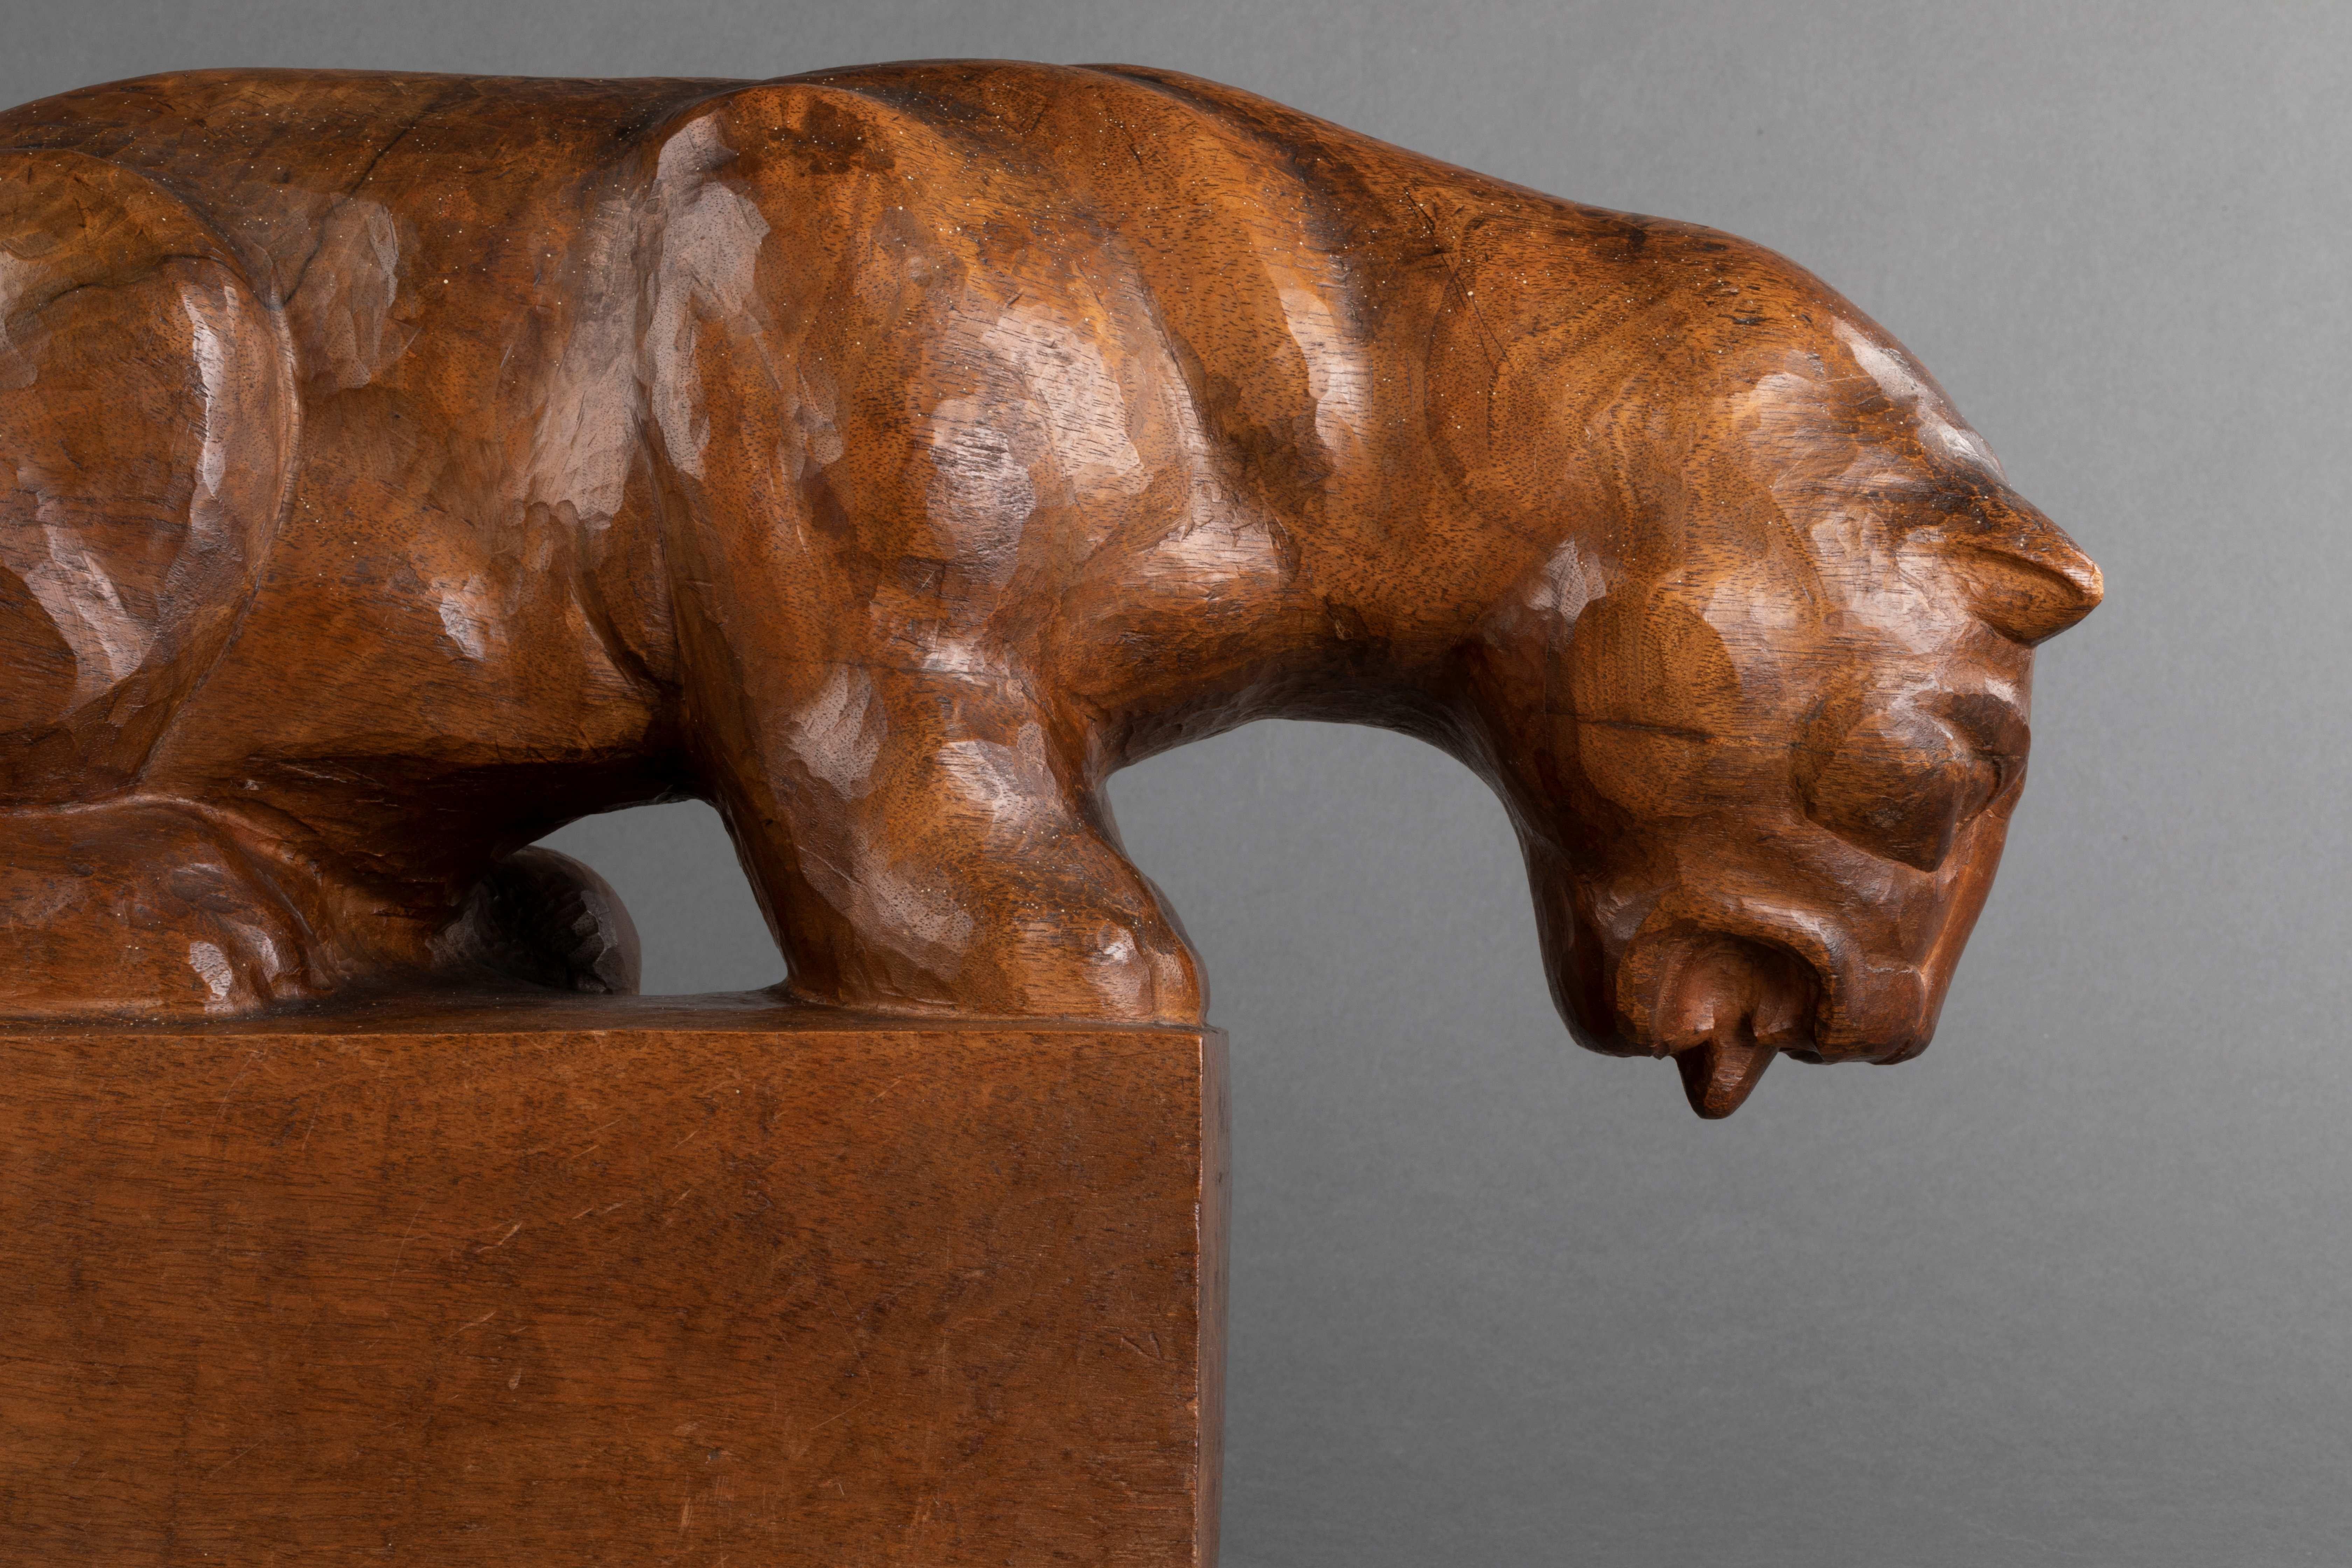 20th Century Auguste Trémont(attrib.) : Lion cub drinking, carved wood sculpture c.1950 For Sale